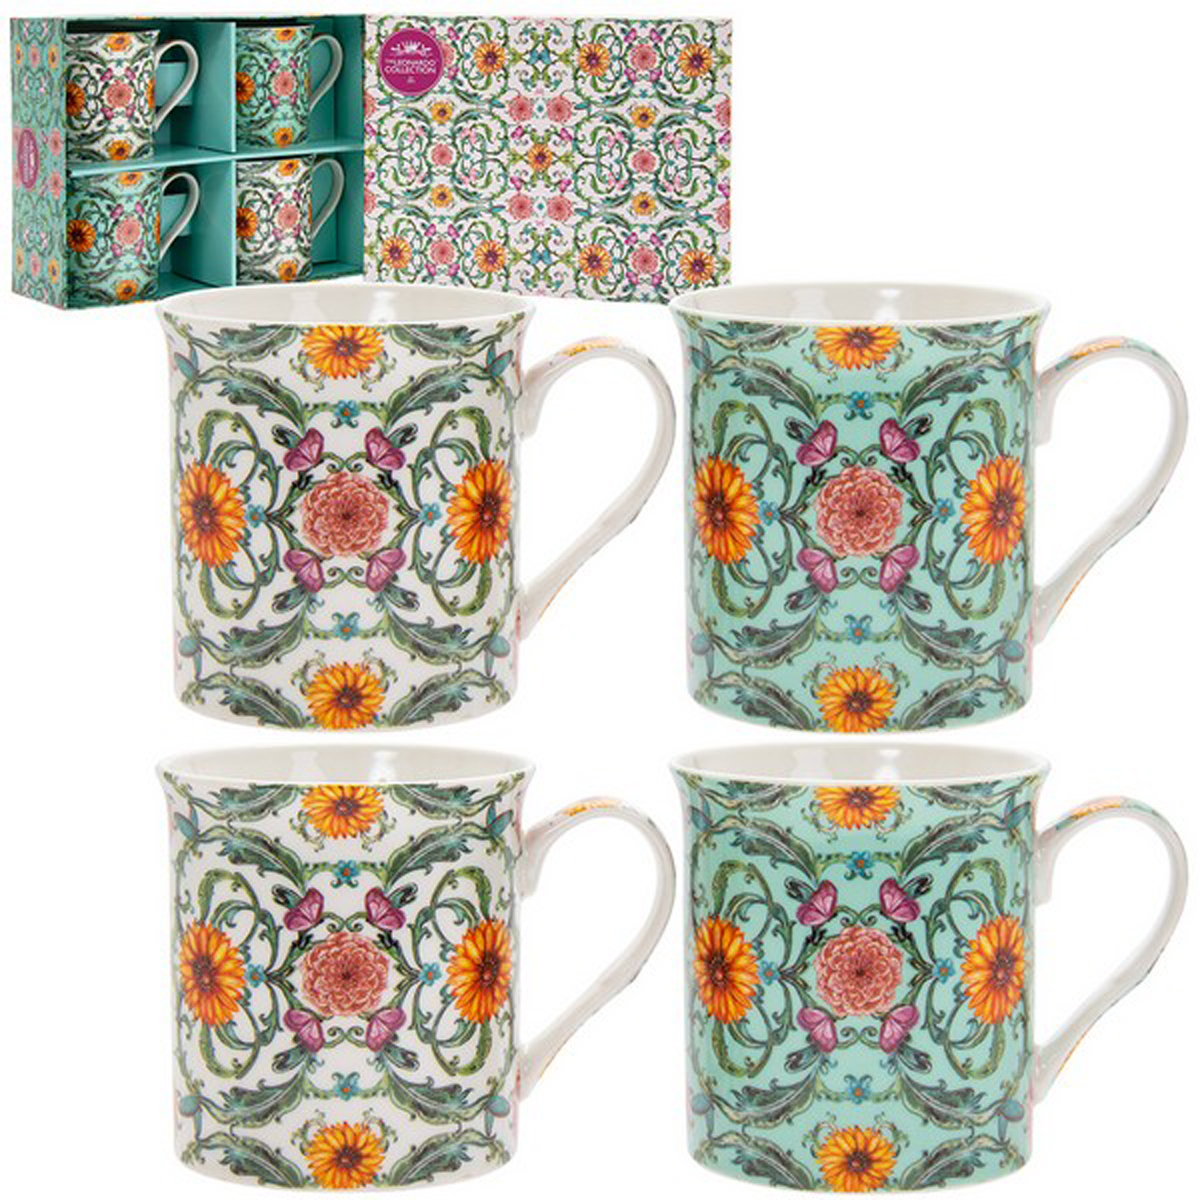 Coffret mugs porcelaine \'Amadeus\' vert orange blanc (4 mugs) - 85x85 mm  - [R1778]